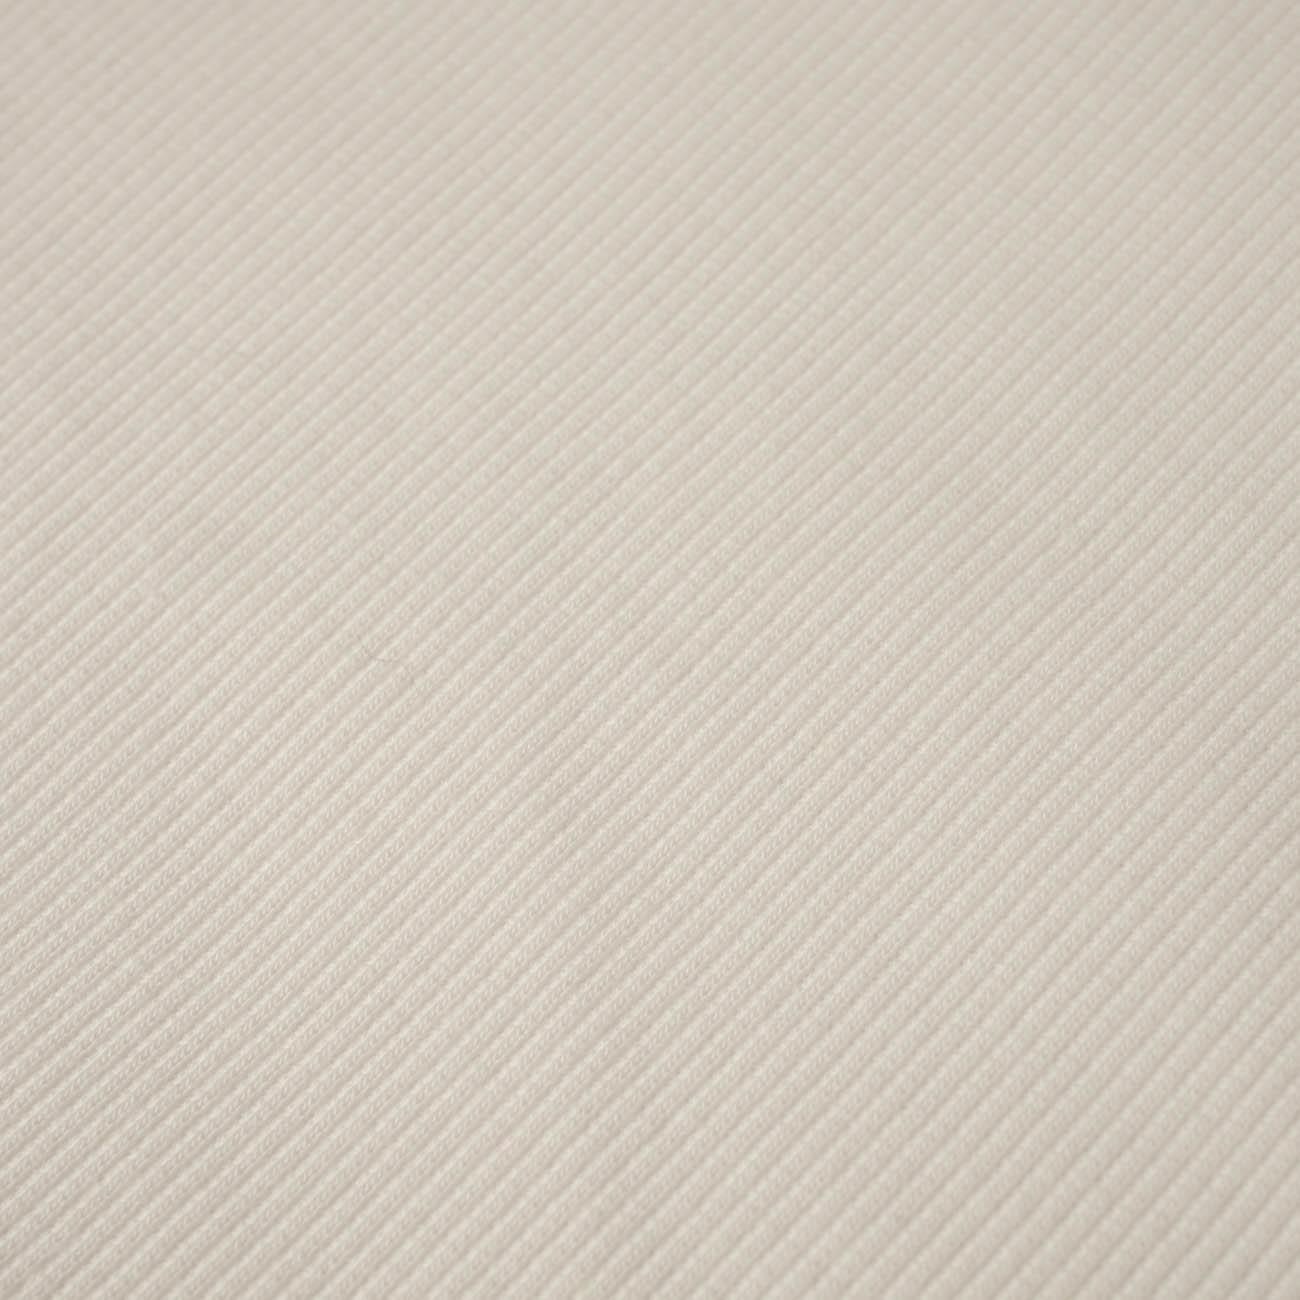 D-02 VANILLA - Ribbed knit fabric